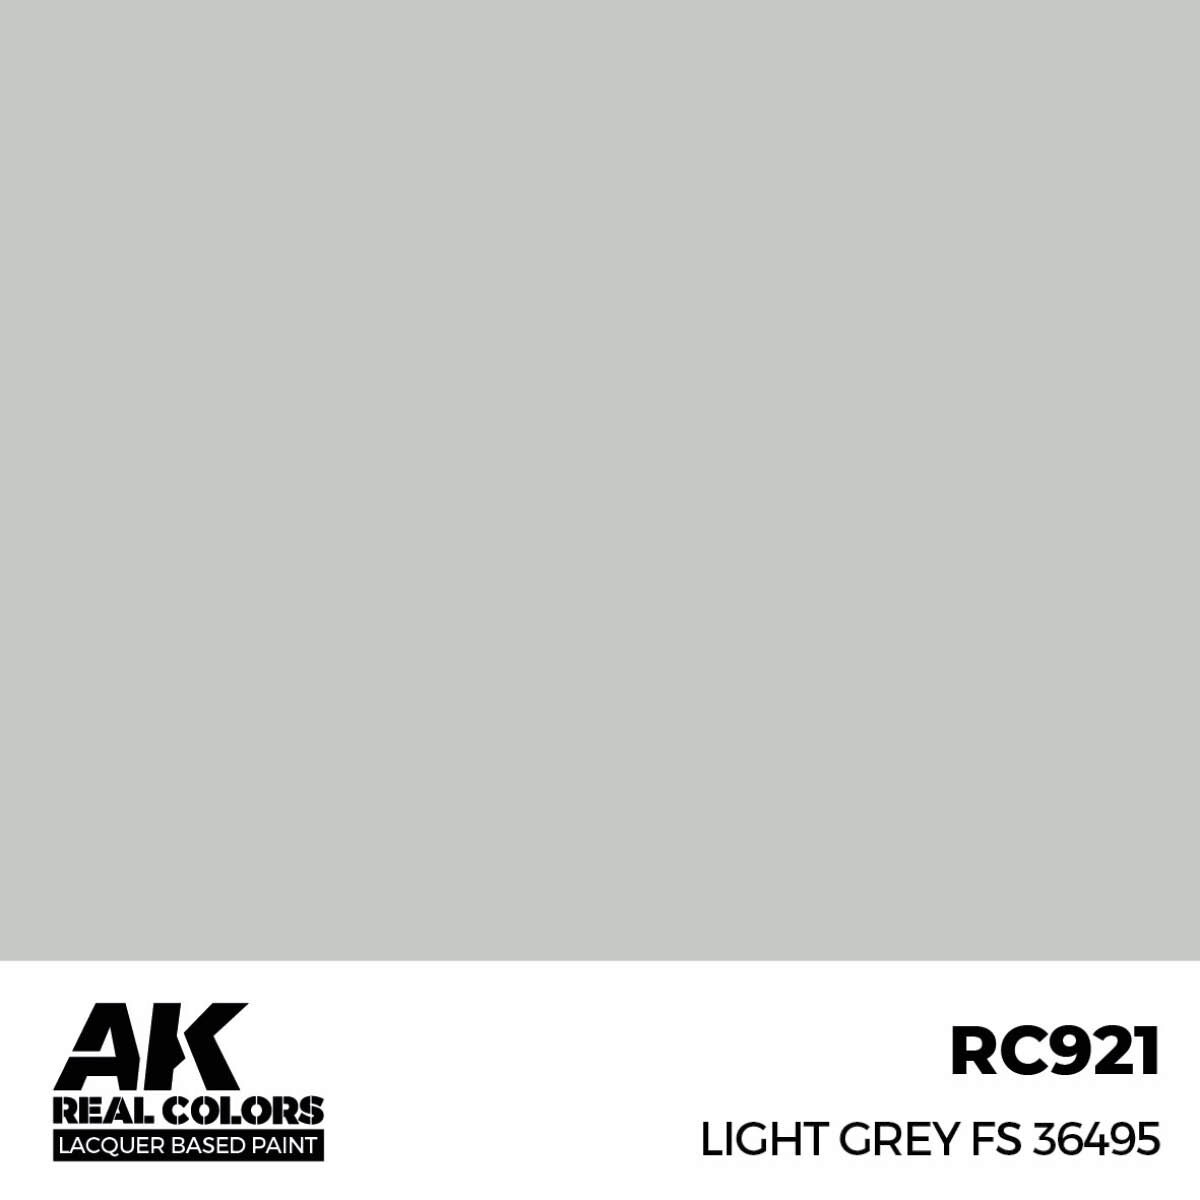 AK RC921 Real Colors Light Grey FS 36495 17 ml.